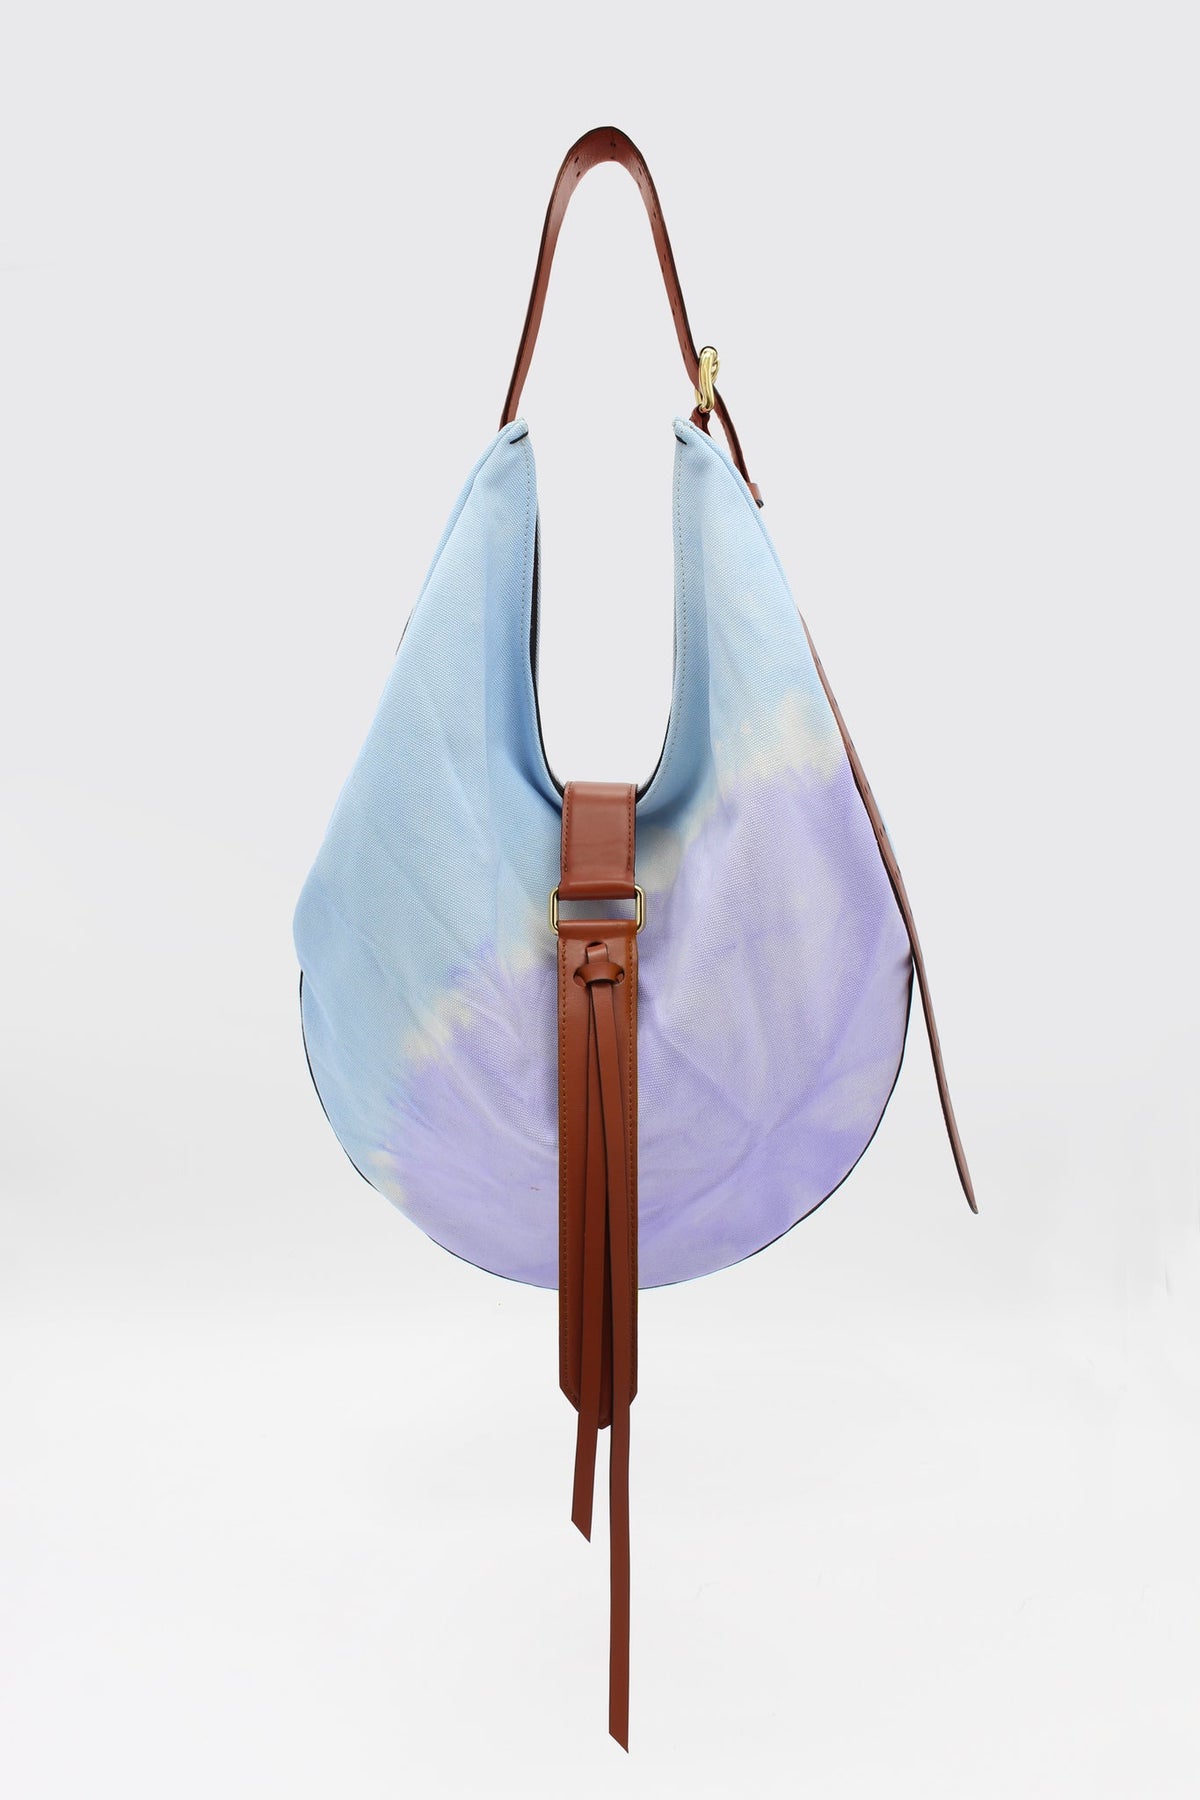 Sunset Bag Maxi Tie-dye Canvas light blue+lilac